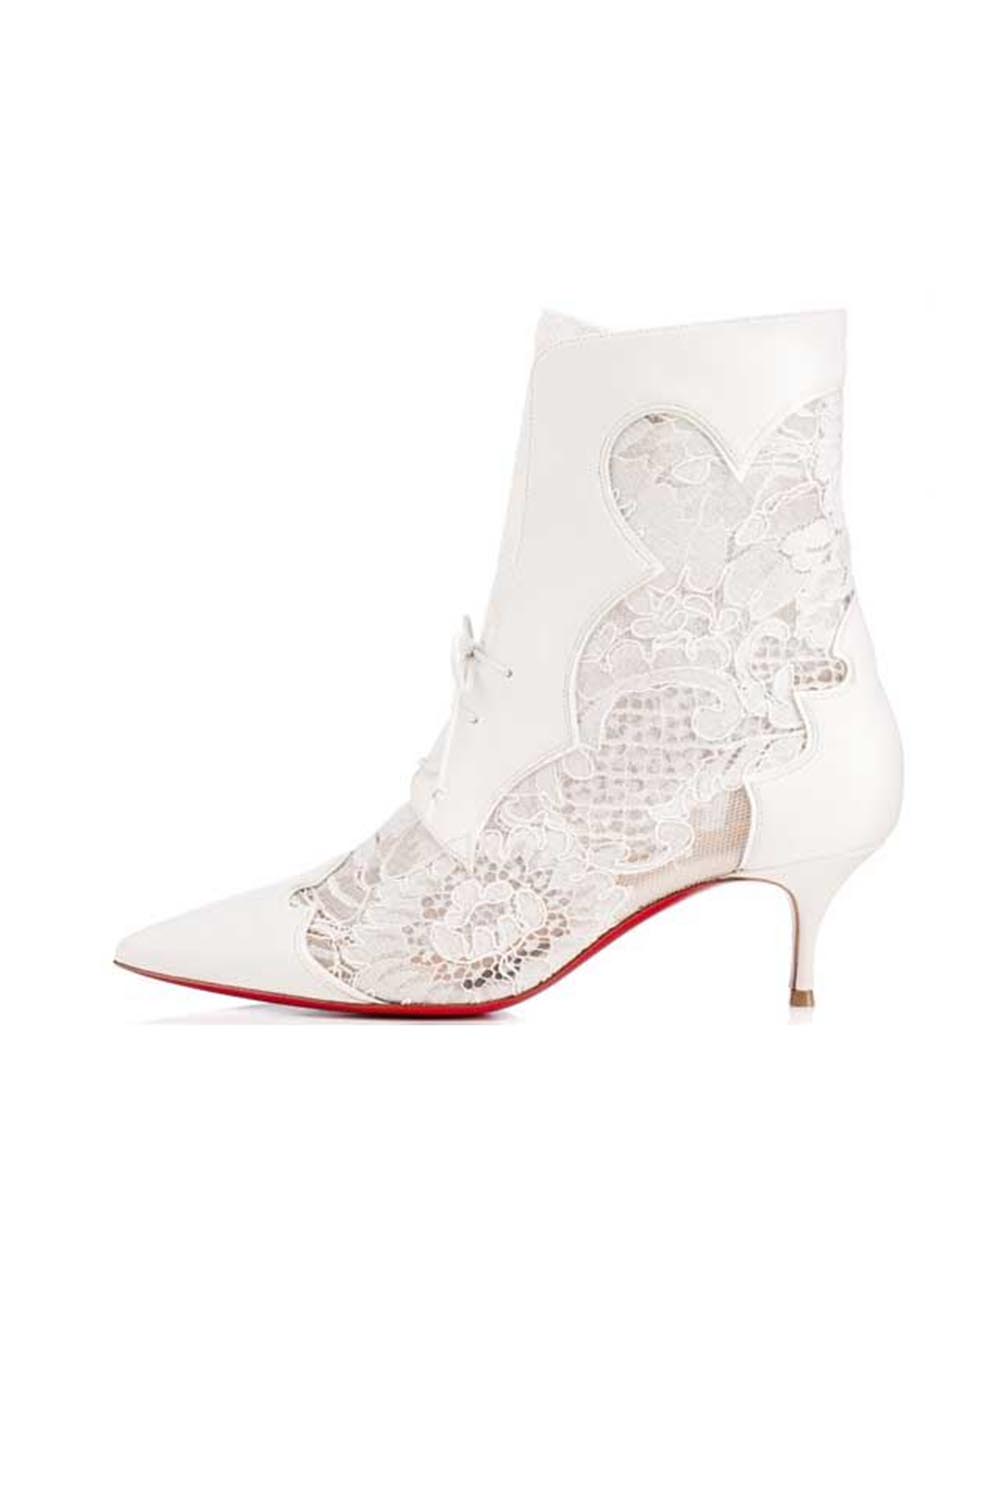 Christian Louboutin bridal shoe collection